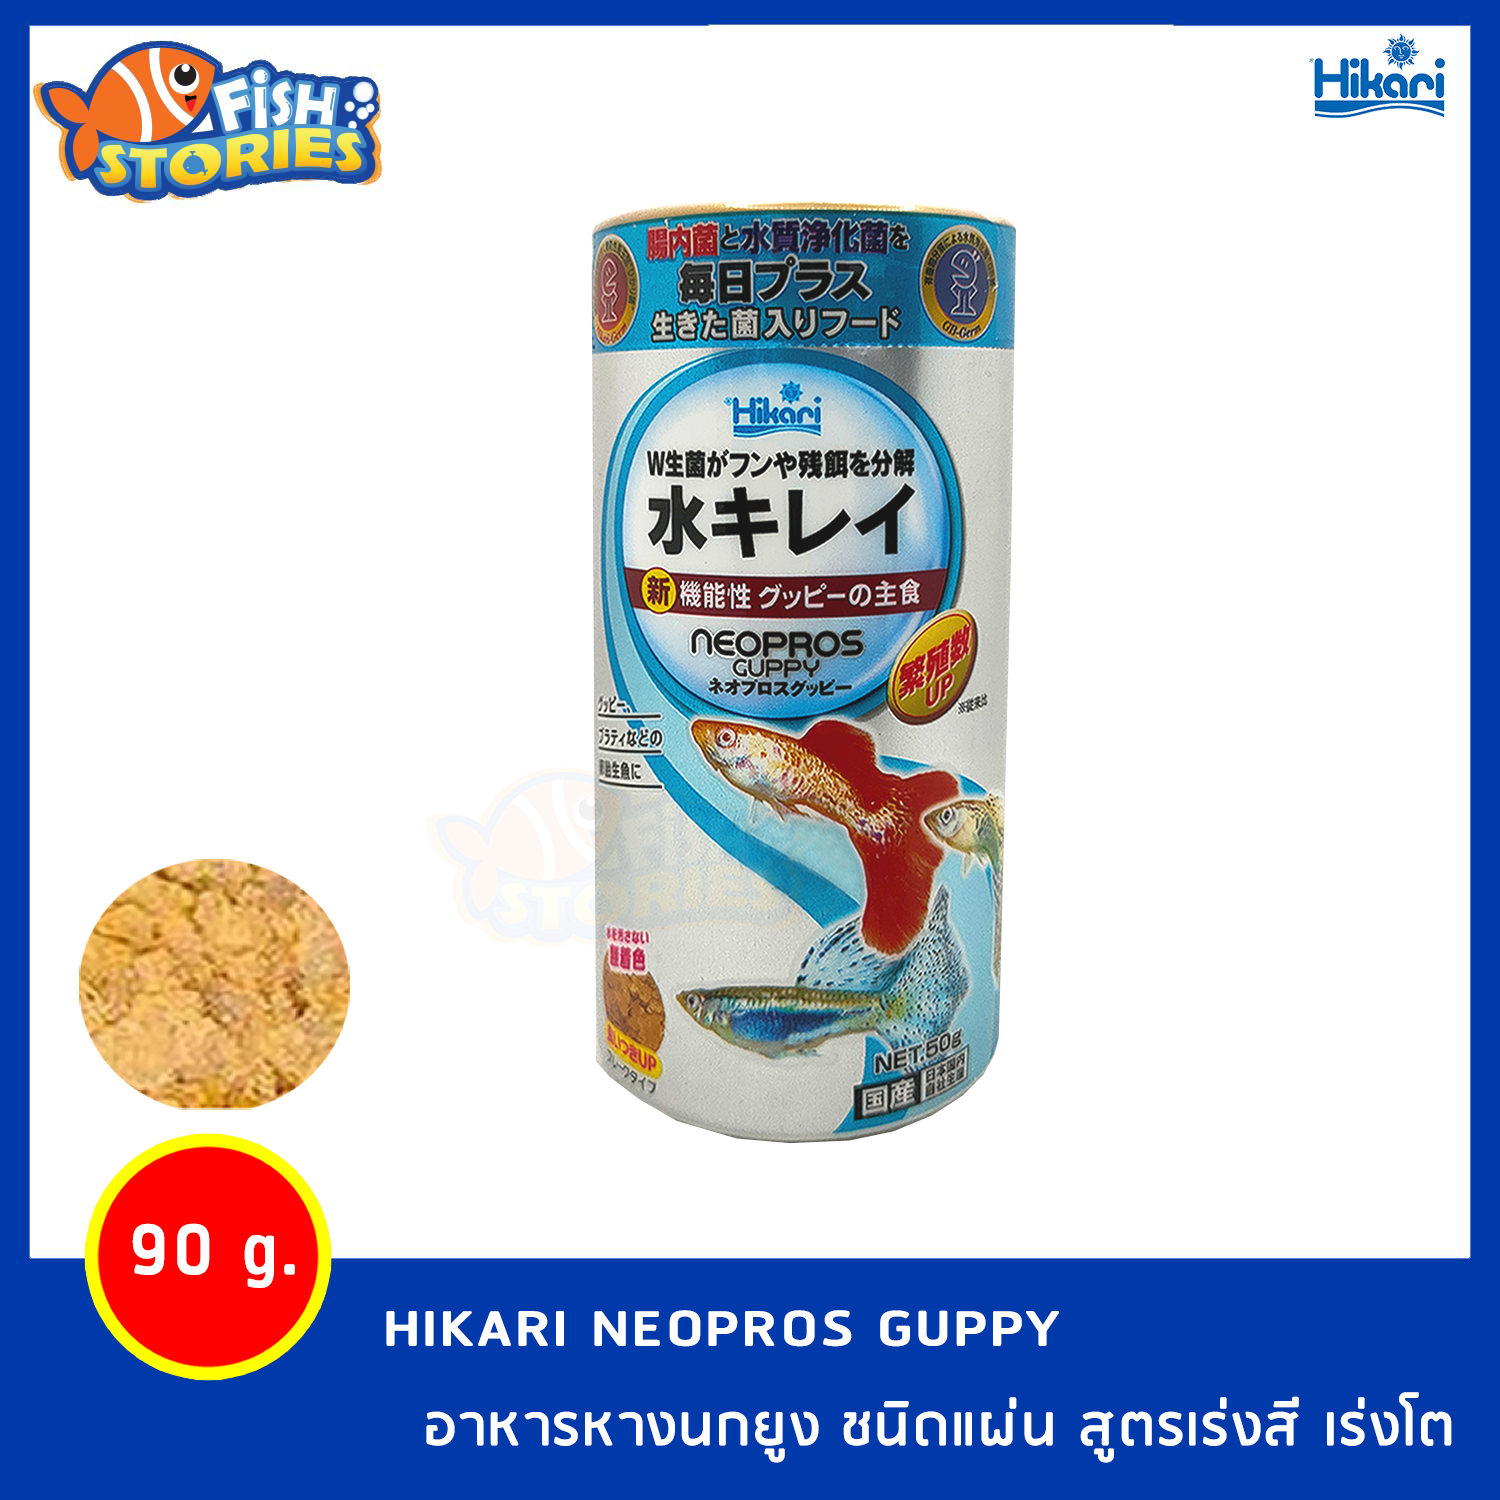 HIKARI Neopros Guppy 50g อาหารปลาหางนกยูง แบบแผ่น สูตรเร่งสี เร่งโต อาหารปลาอย่างดี นำเข้าจากญี่ปุ่น